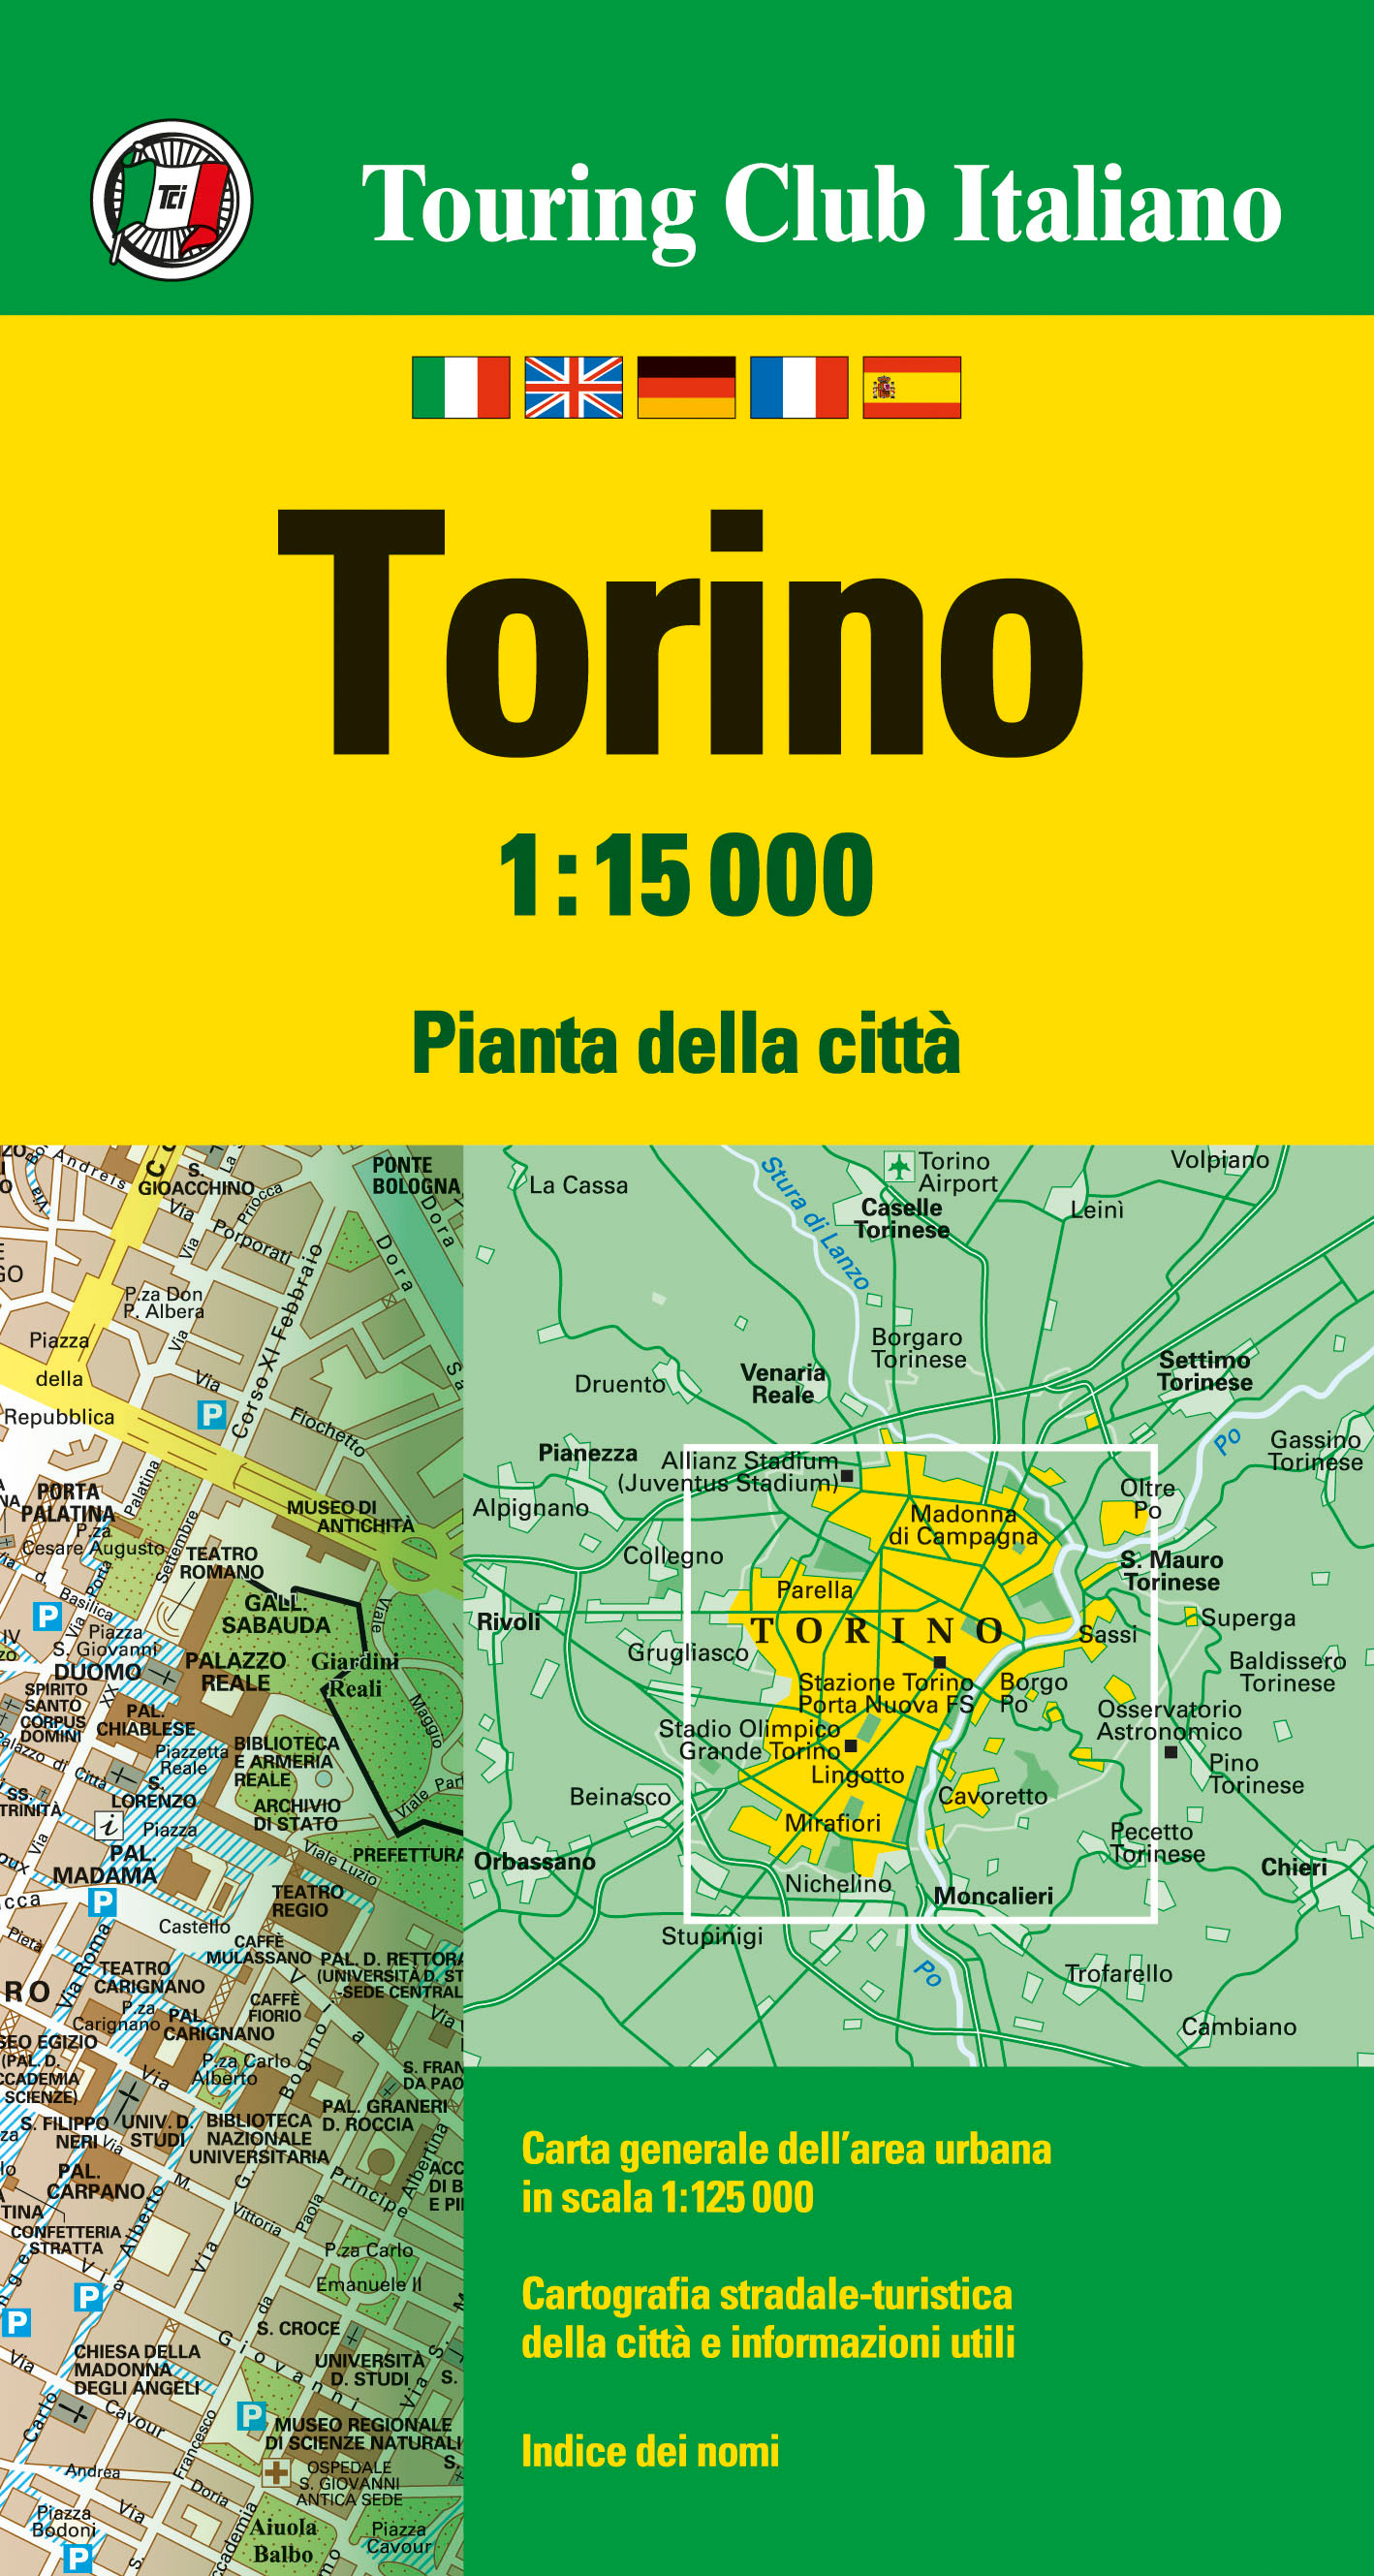 Online bestellen: Stadsplattegrond Torino | Touring Club Italiano